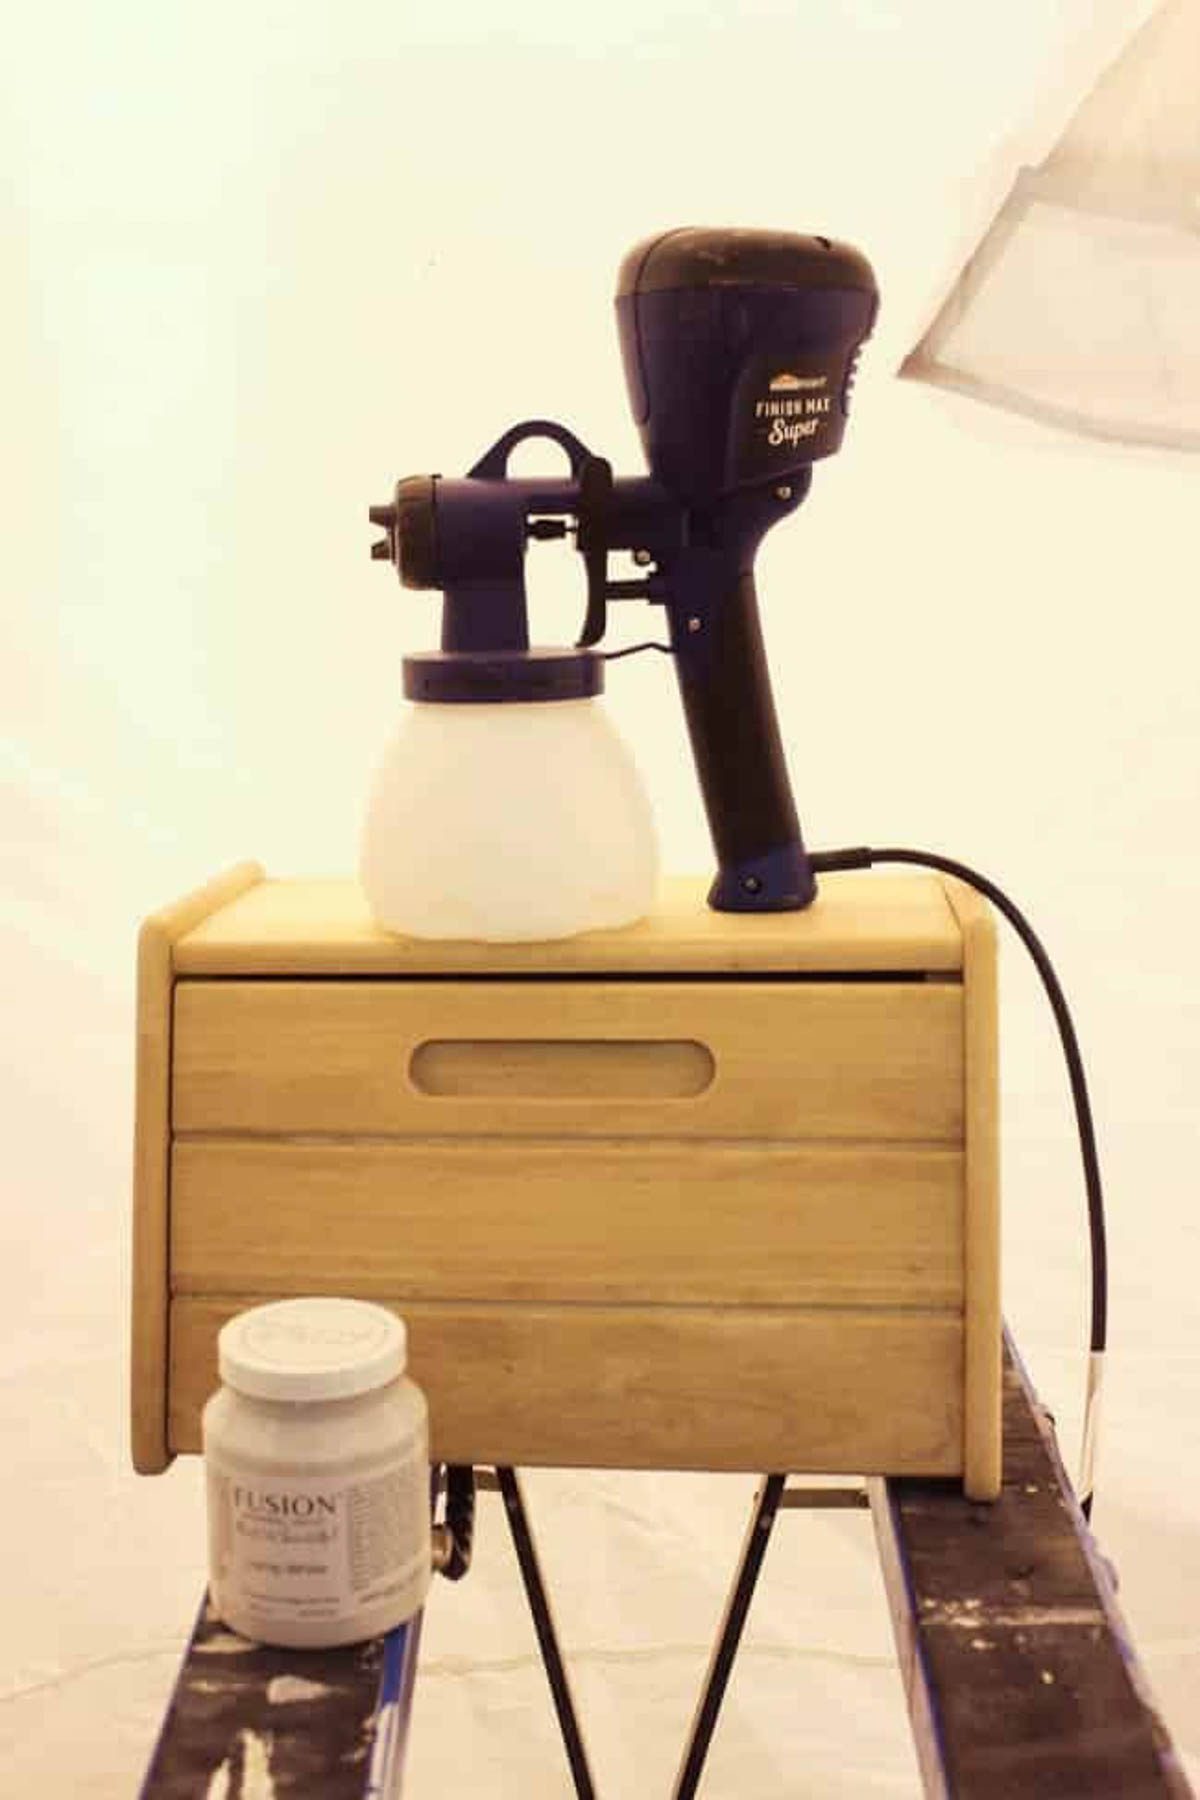 Spray gun used to paint the DIY bread box